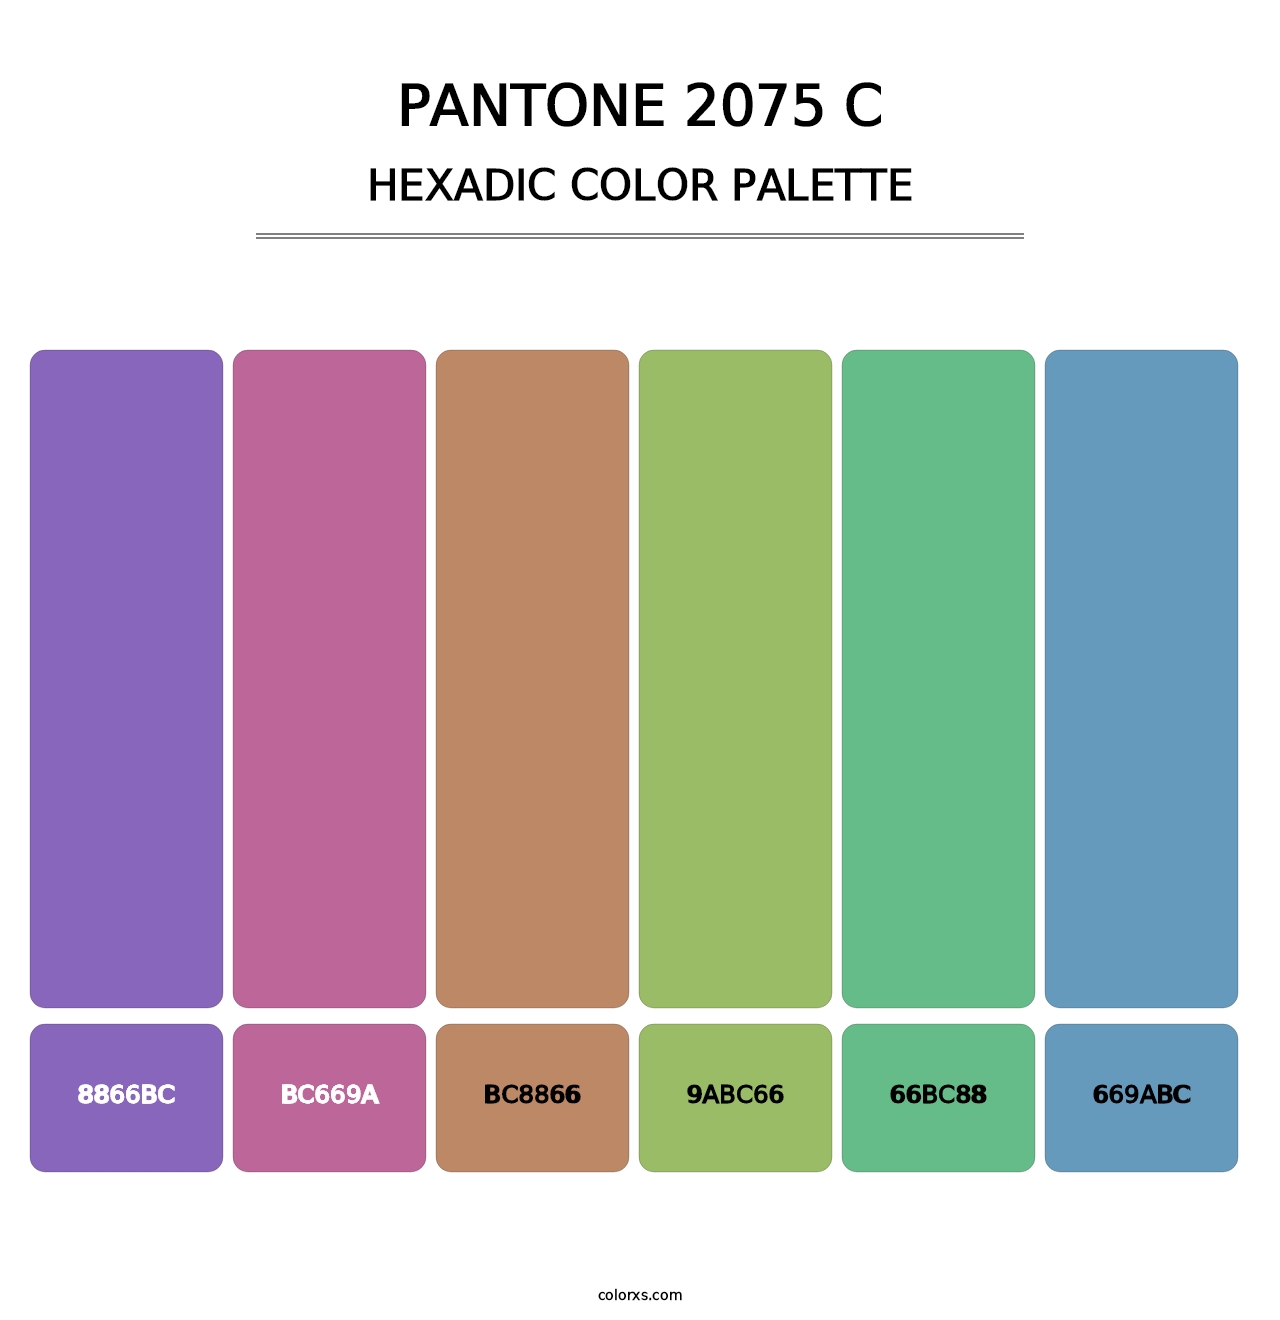 PANTONE 2075 C - Hexadic Color Palette